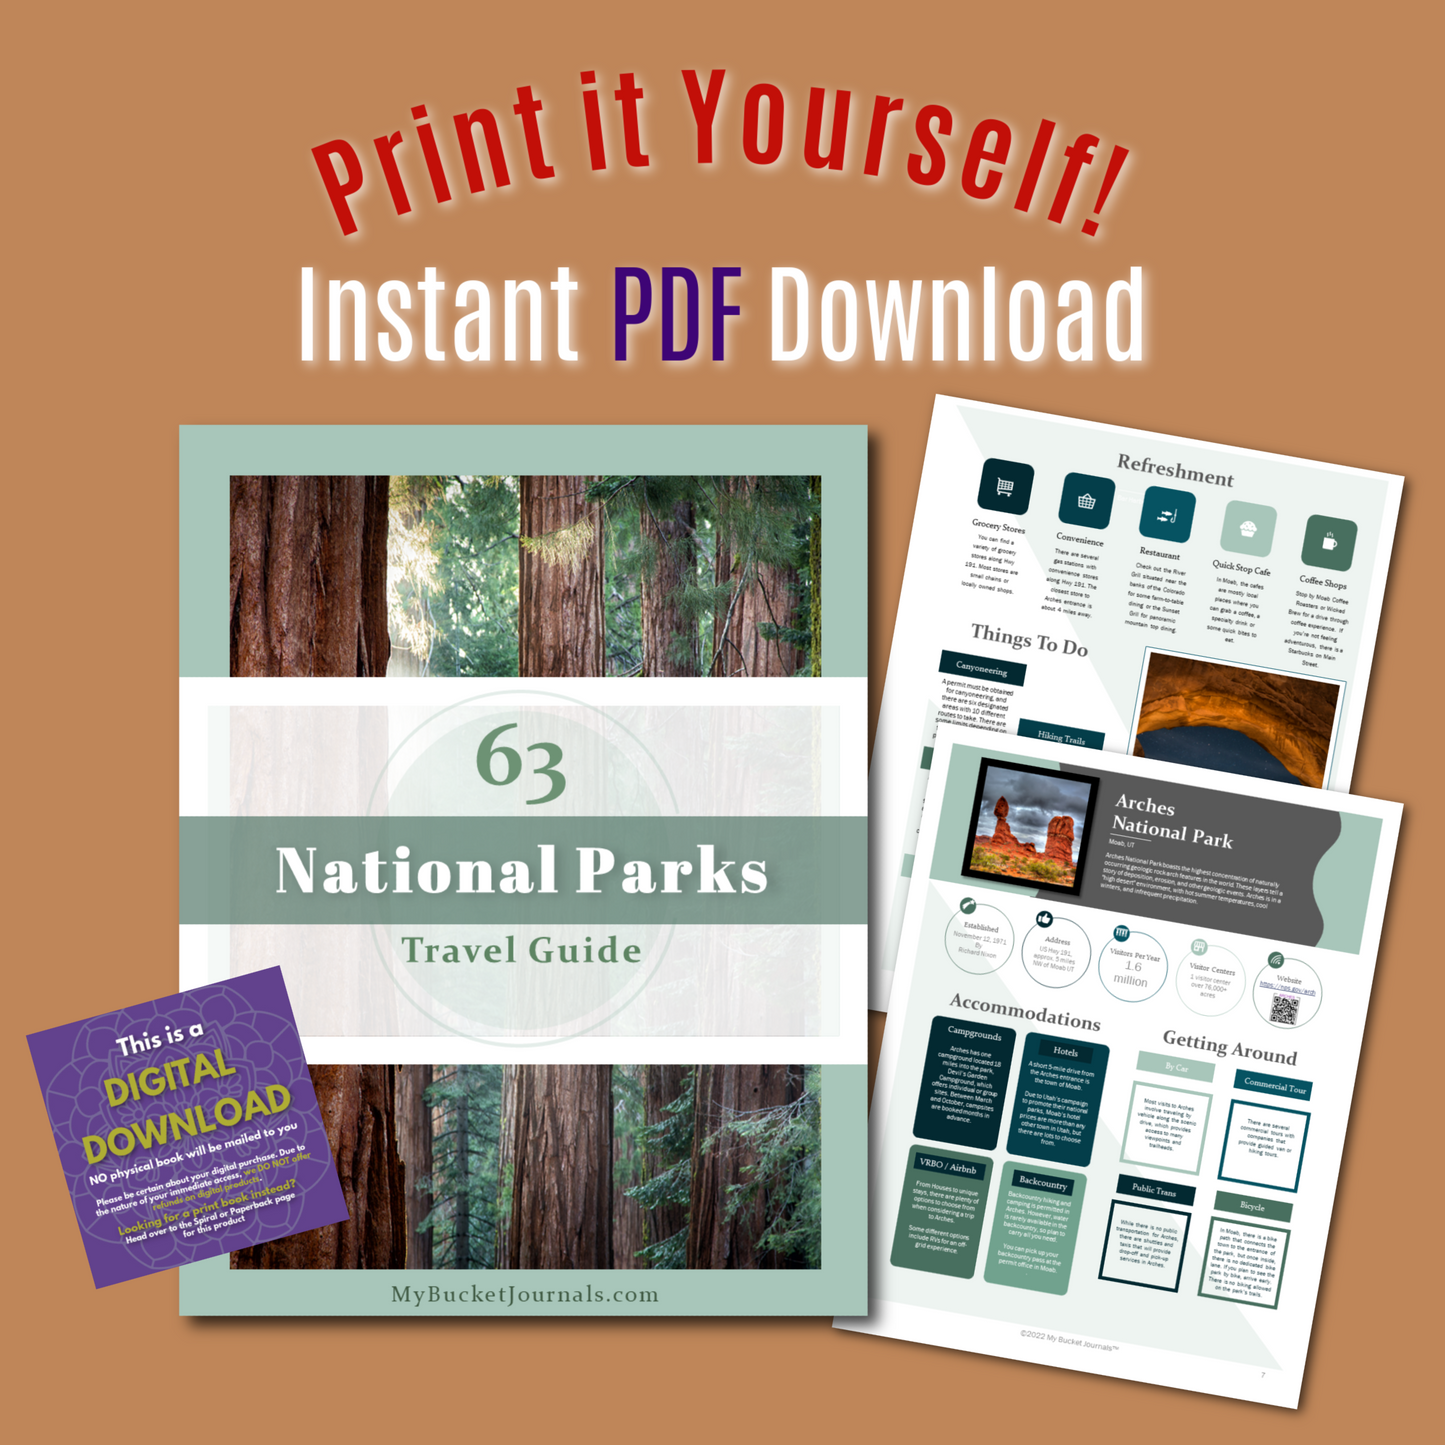 National Park Bucket Journal 2024 Edition - Printable